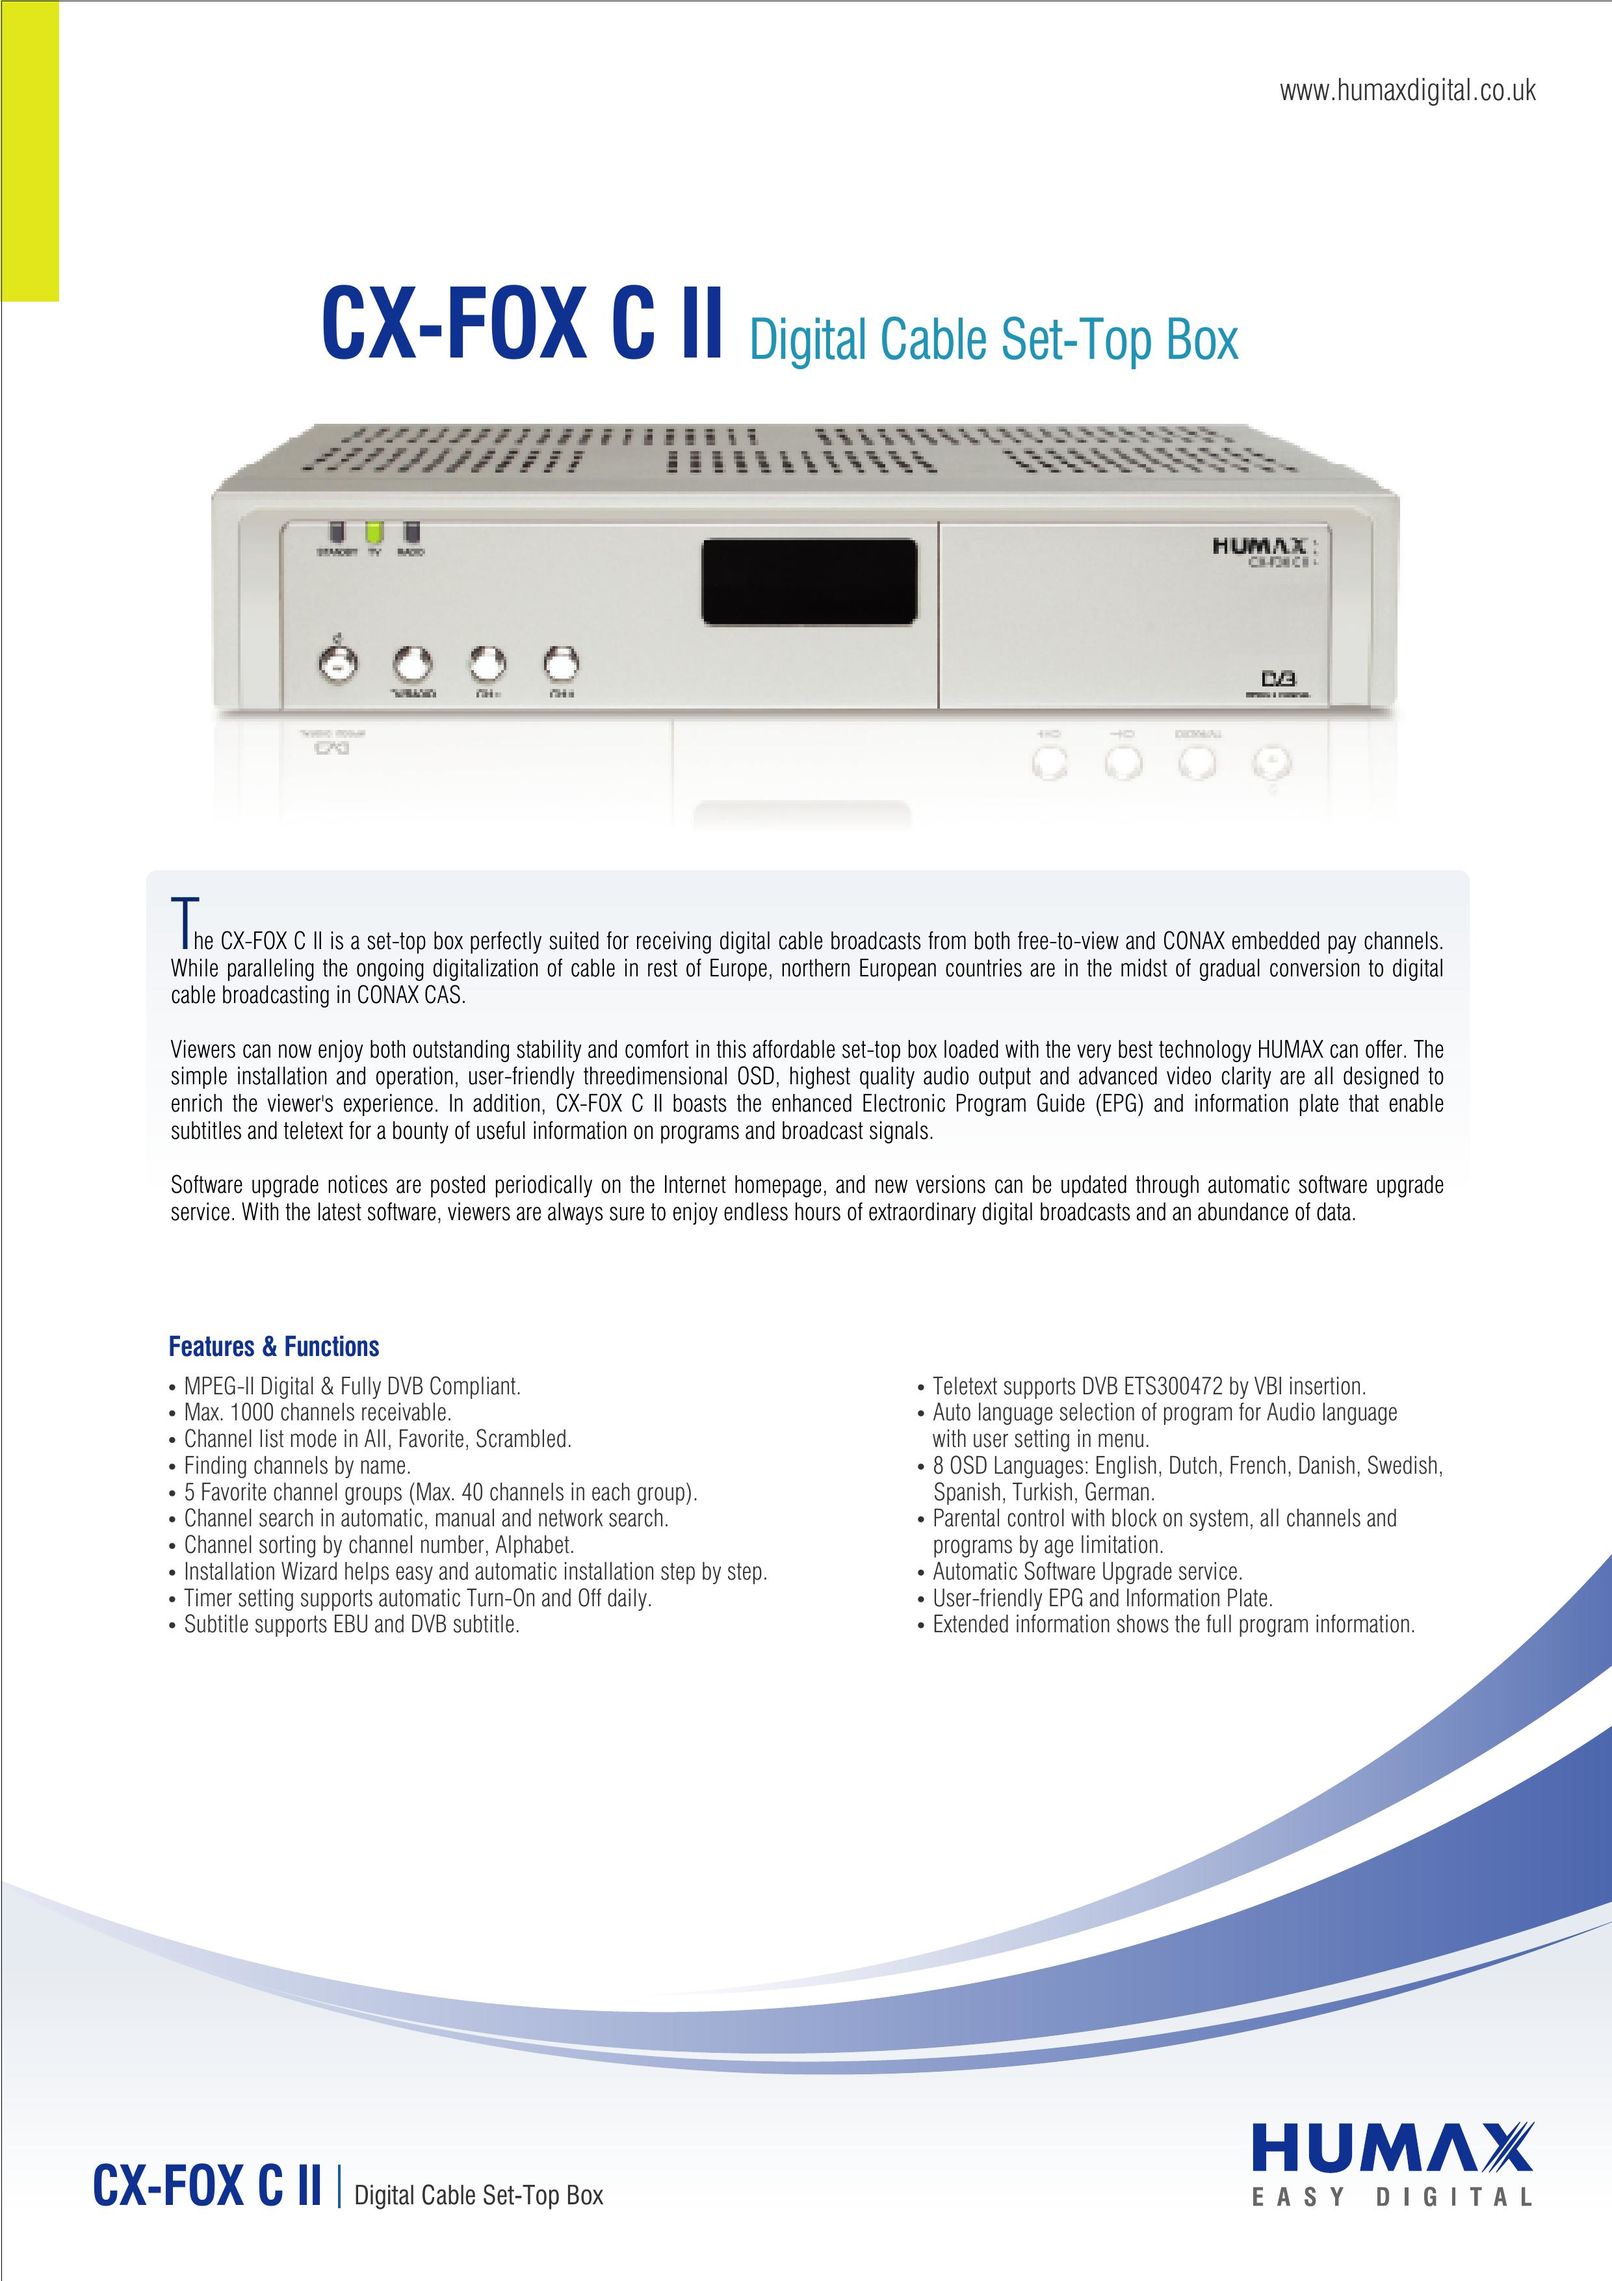 Humax CX-FOX C II Cable Box User Manual